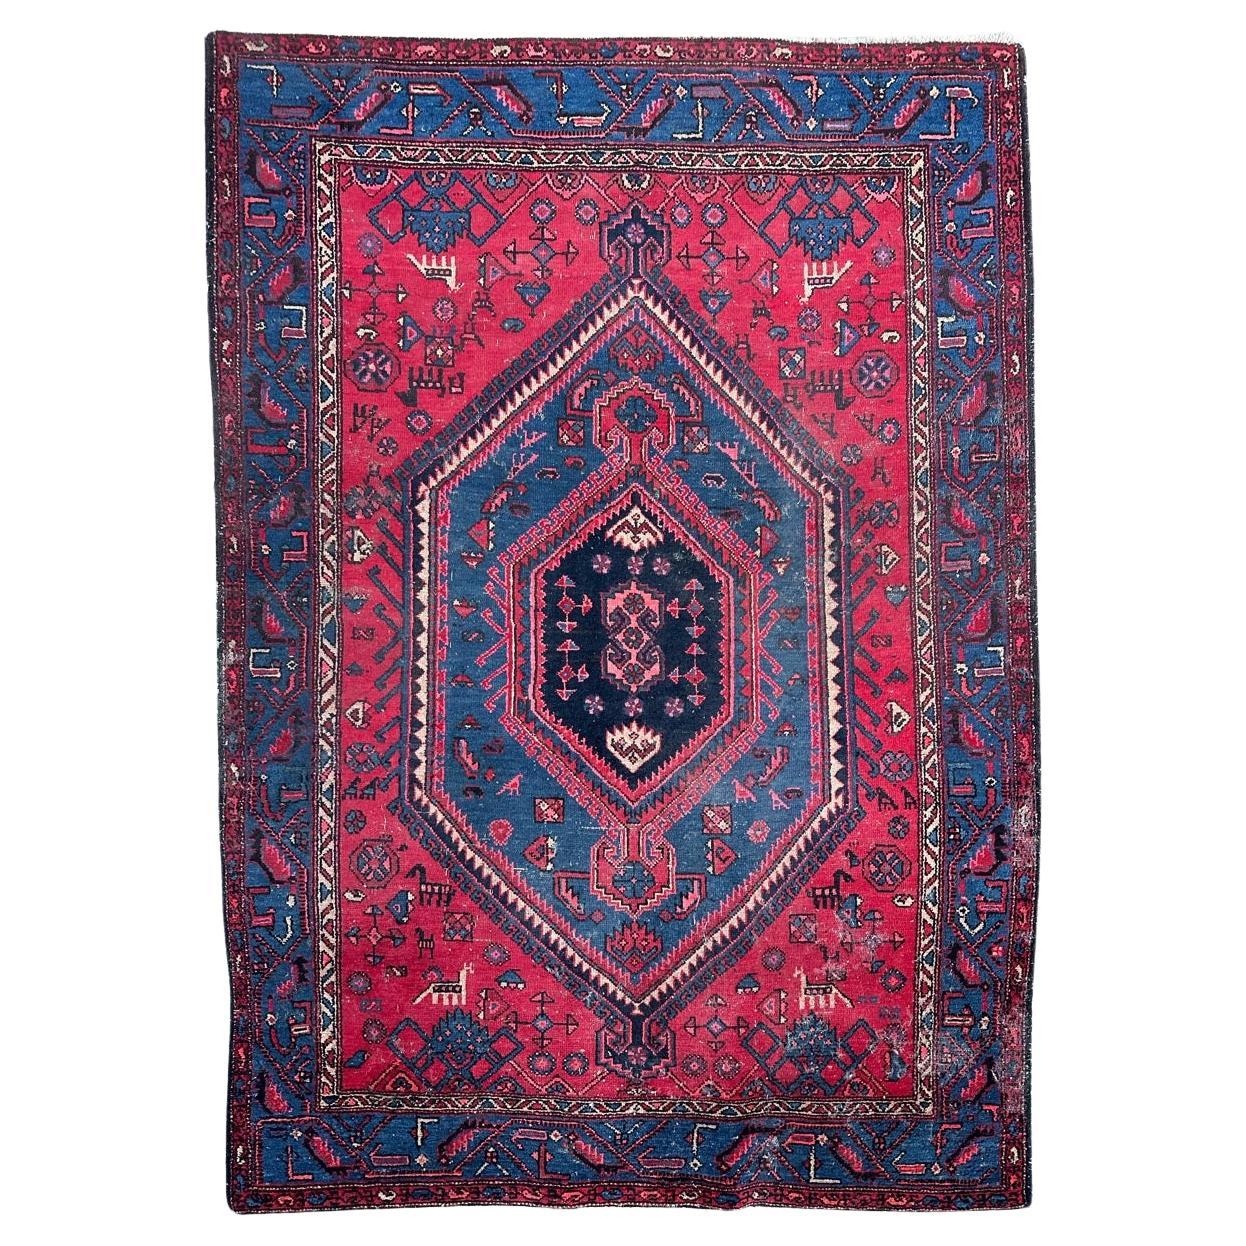 Bobyrug’s Nice vintage distressed Hamadan rug 